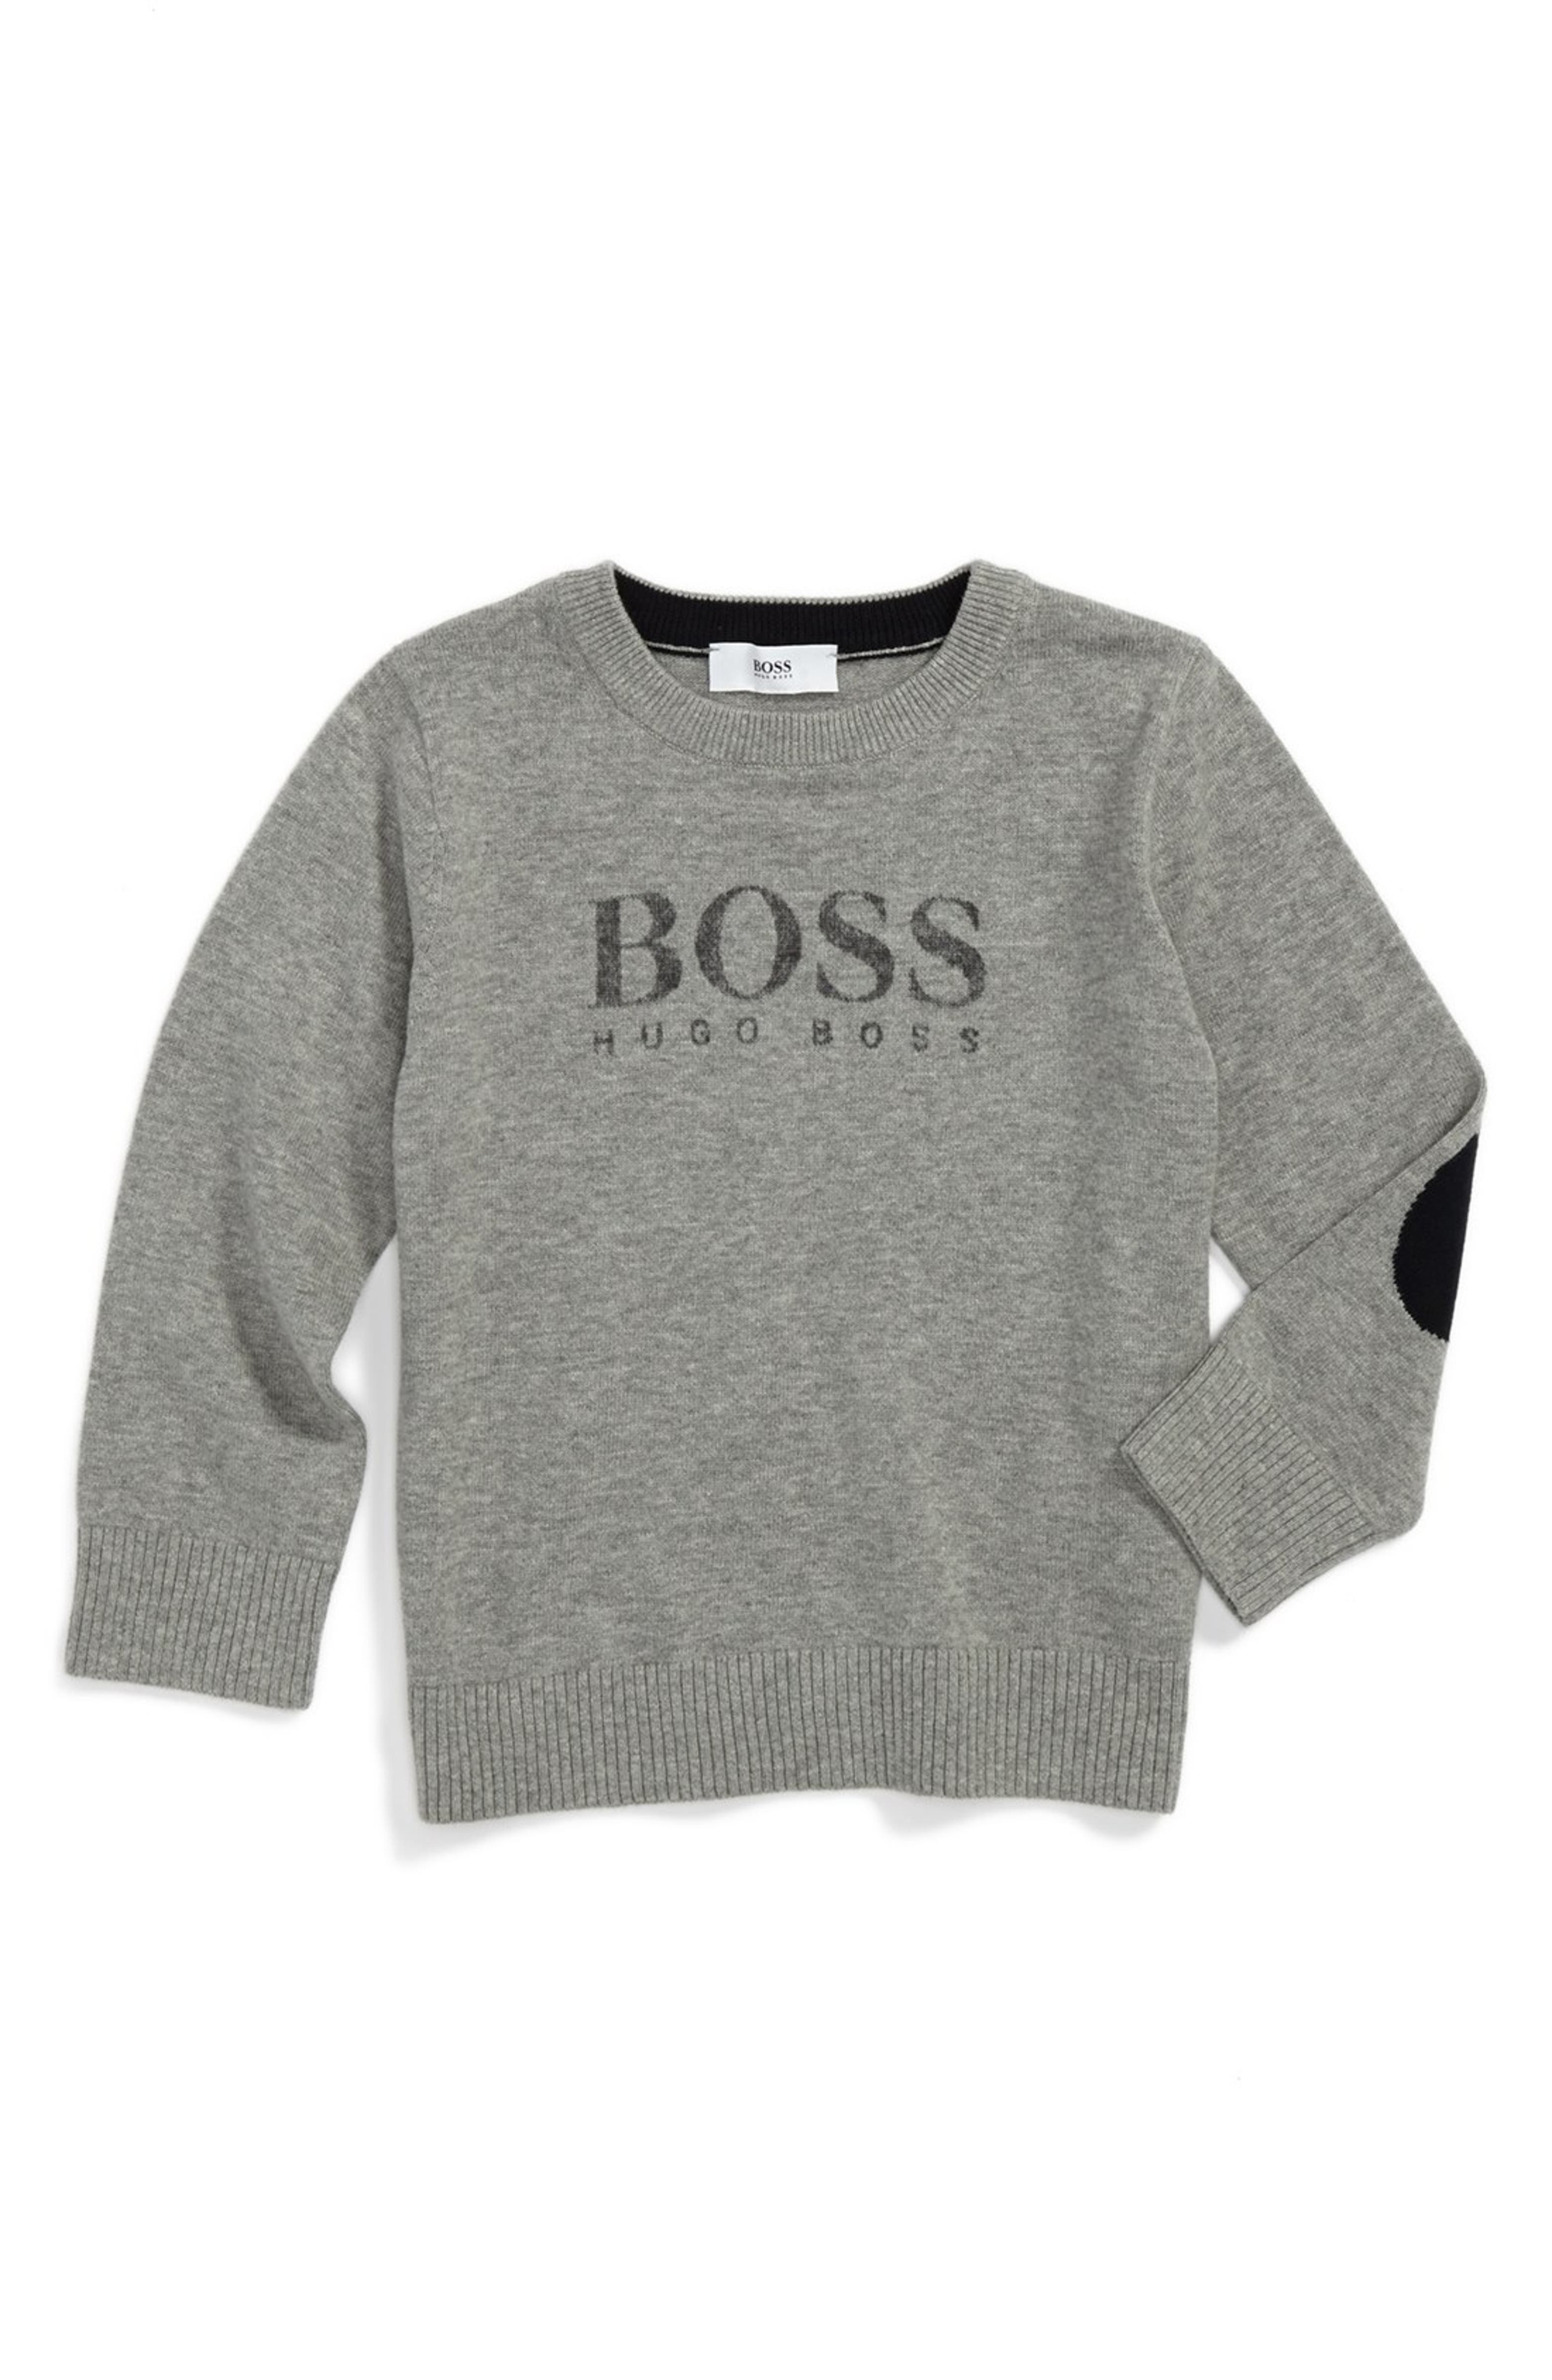 BOSS Kidswear Elbow Patch Sweater (Toddler Boys) | Nordstrom